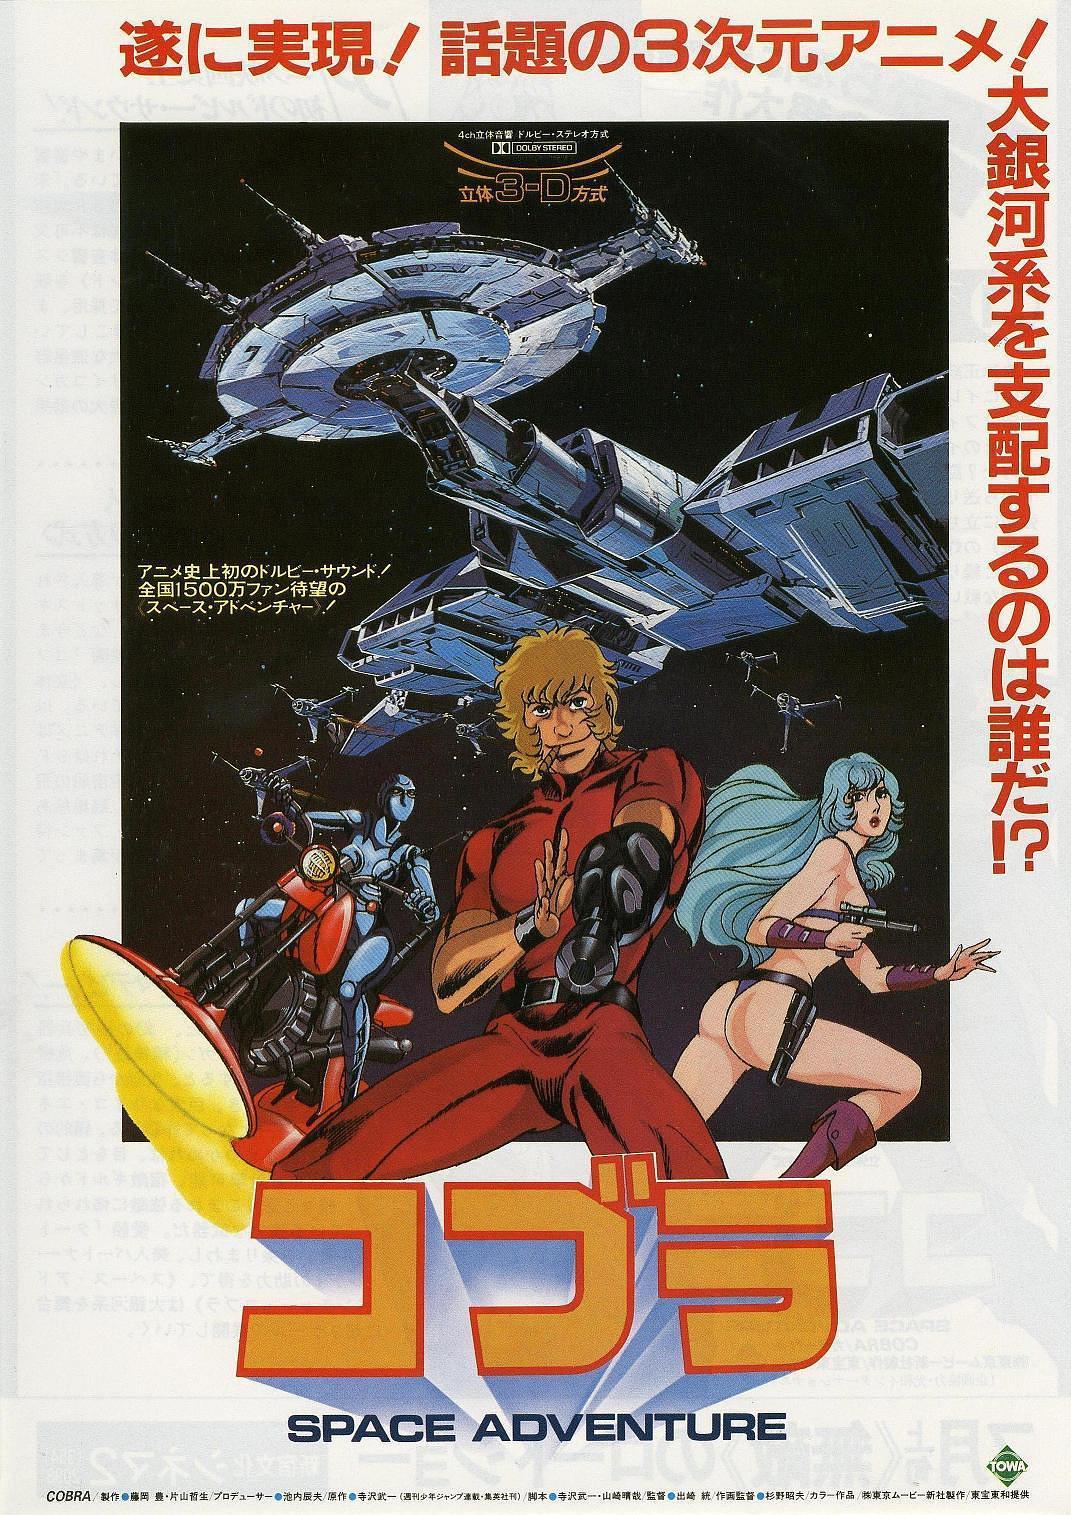  Space.Adventure.Cobra.The.Movie.1982.JAPANESE.1080p.BluRay.x264-HANDJOB 8.62-1.png